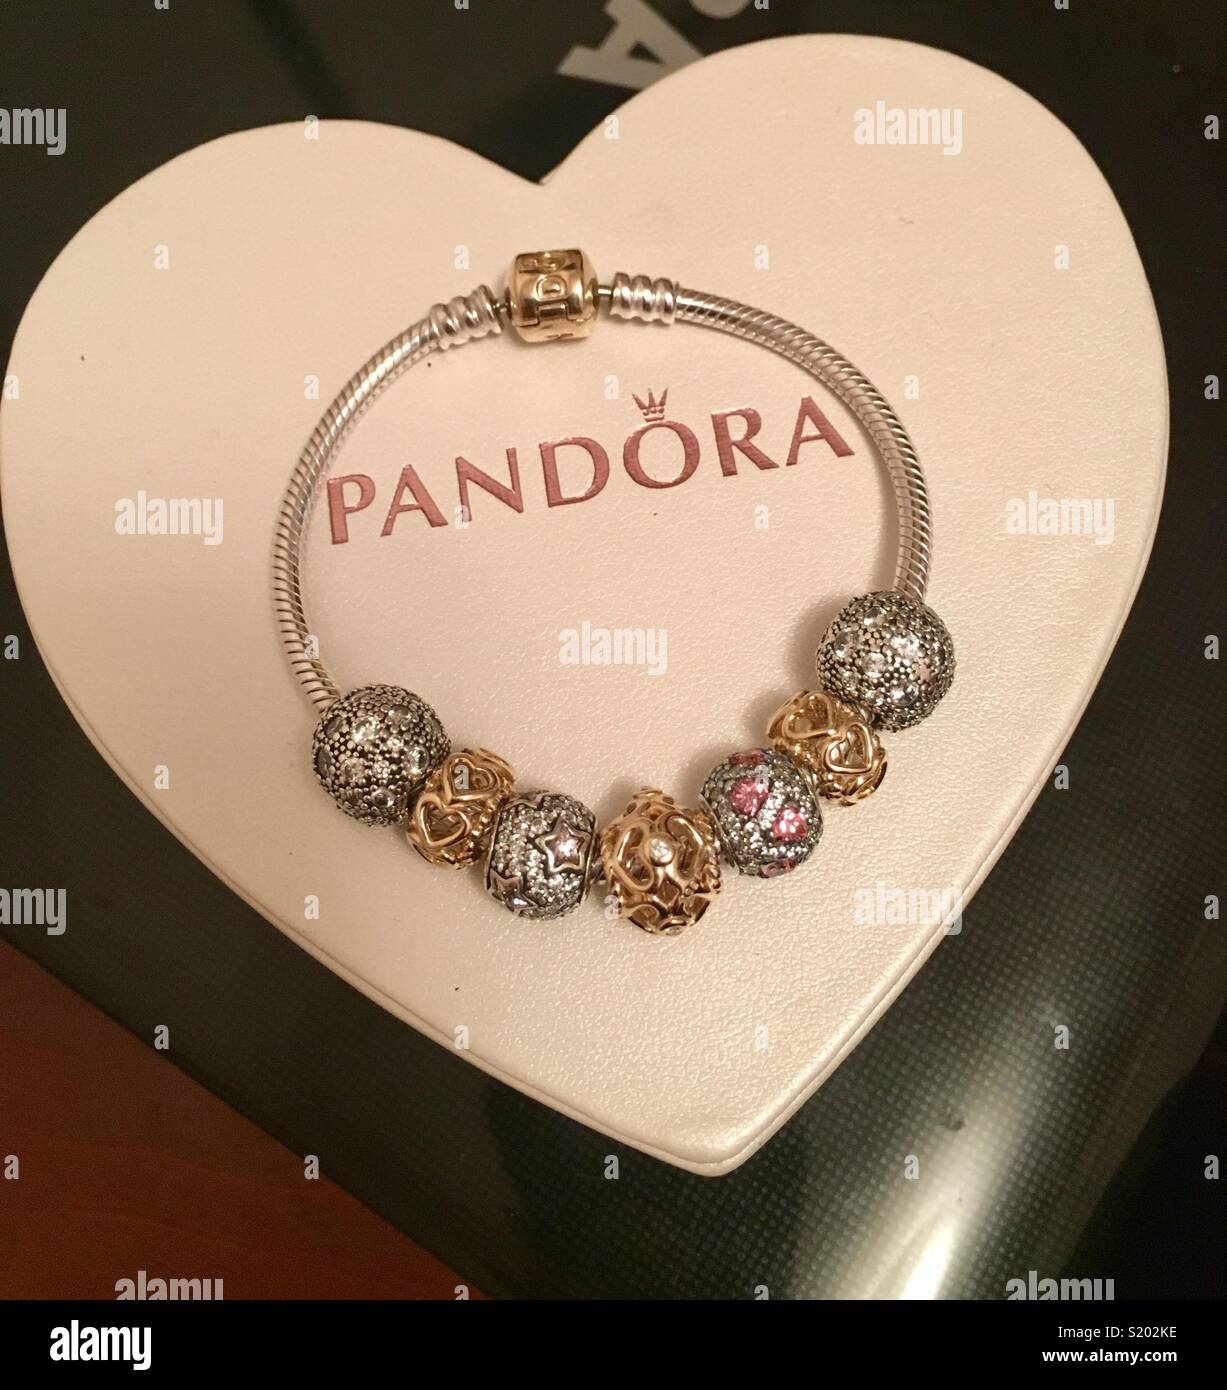 Pandora Armband Stockfotos Und Bilder Kaufen Alamy